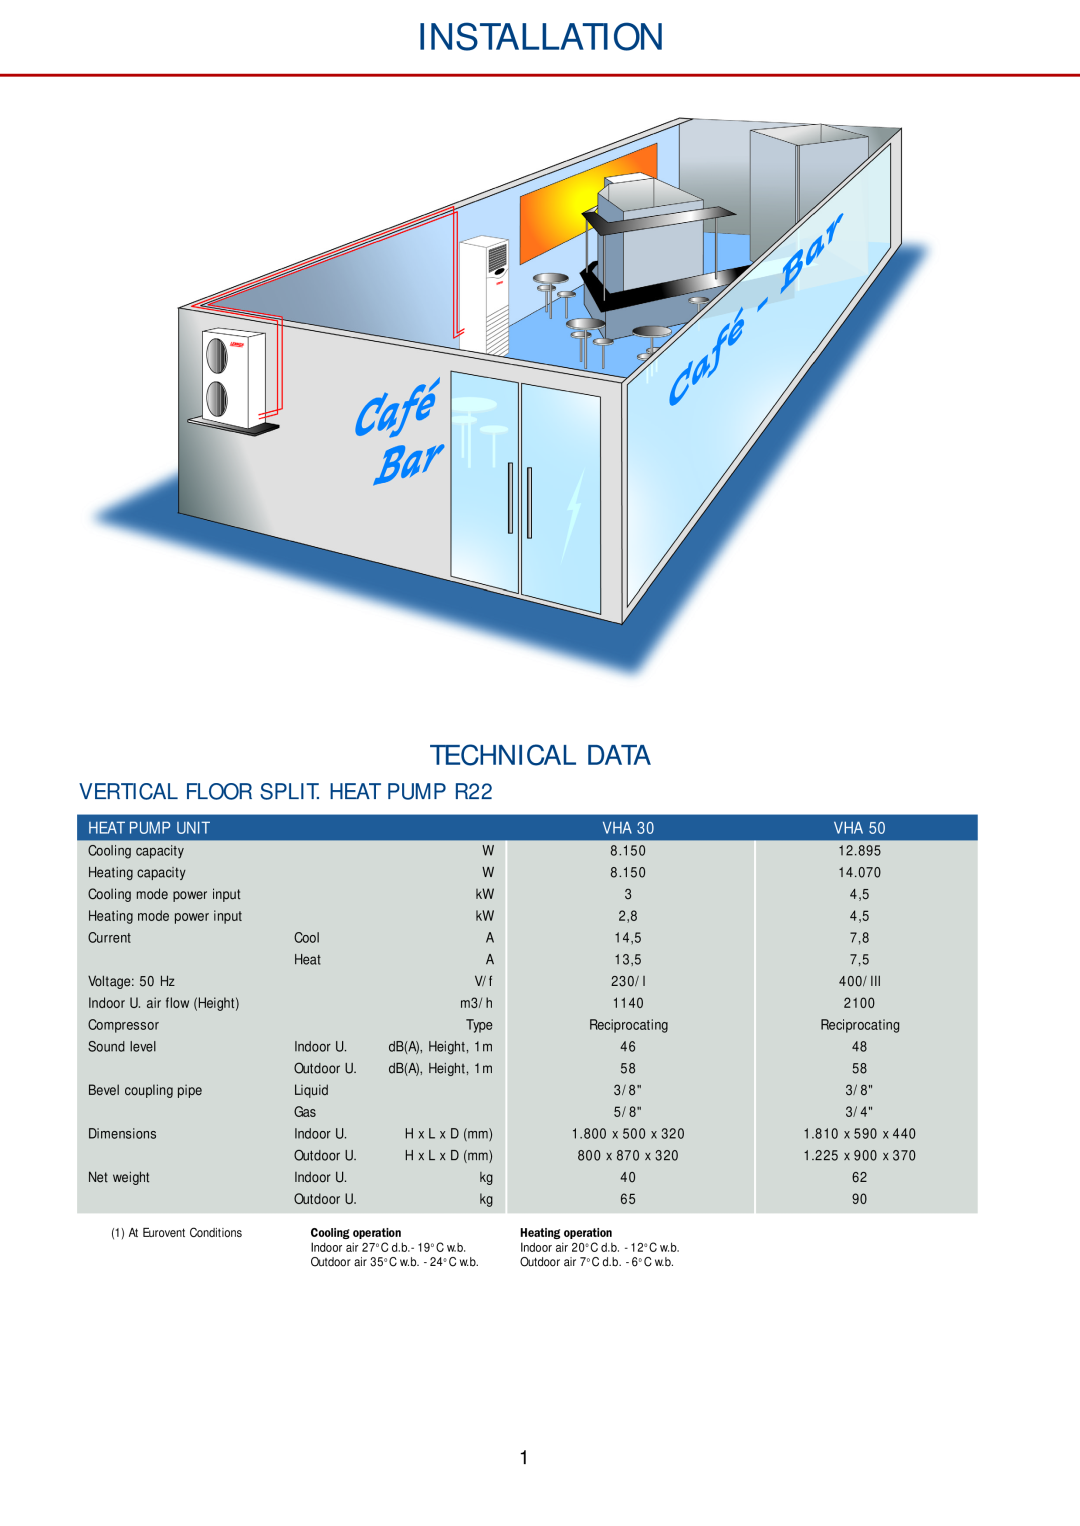 Lennox International Inc manual Installation, Technical Data, VERTICAL FLOOR SPLIT. HEAT PUMP R22, Heat Pump Unit 